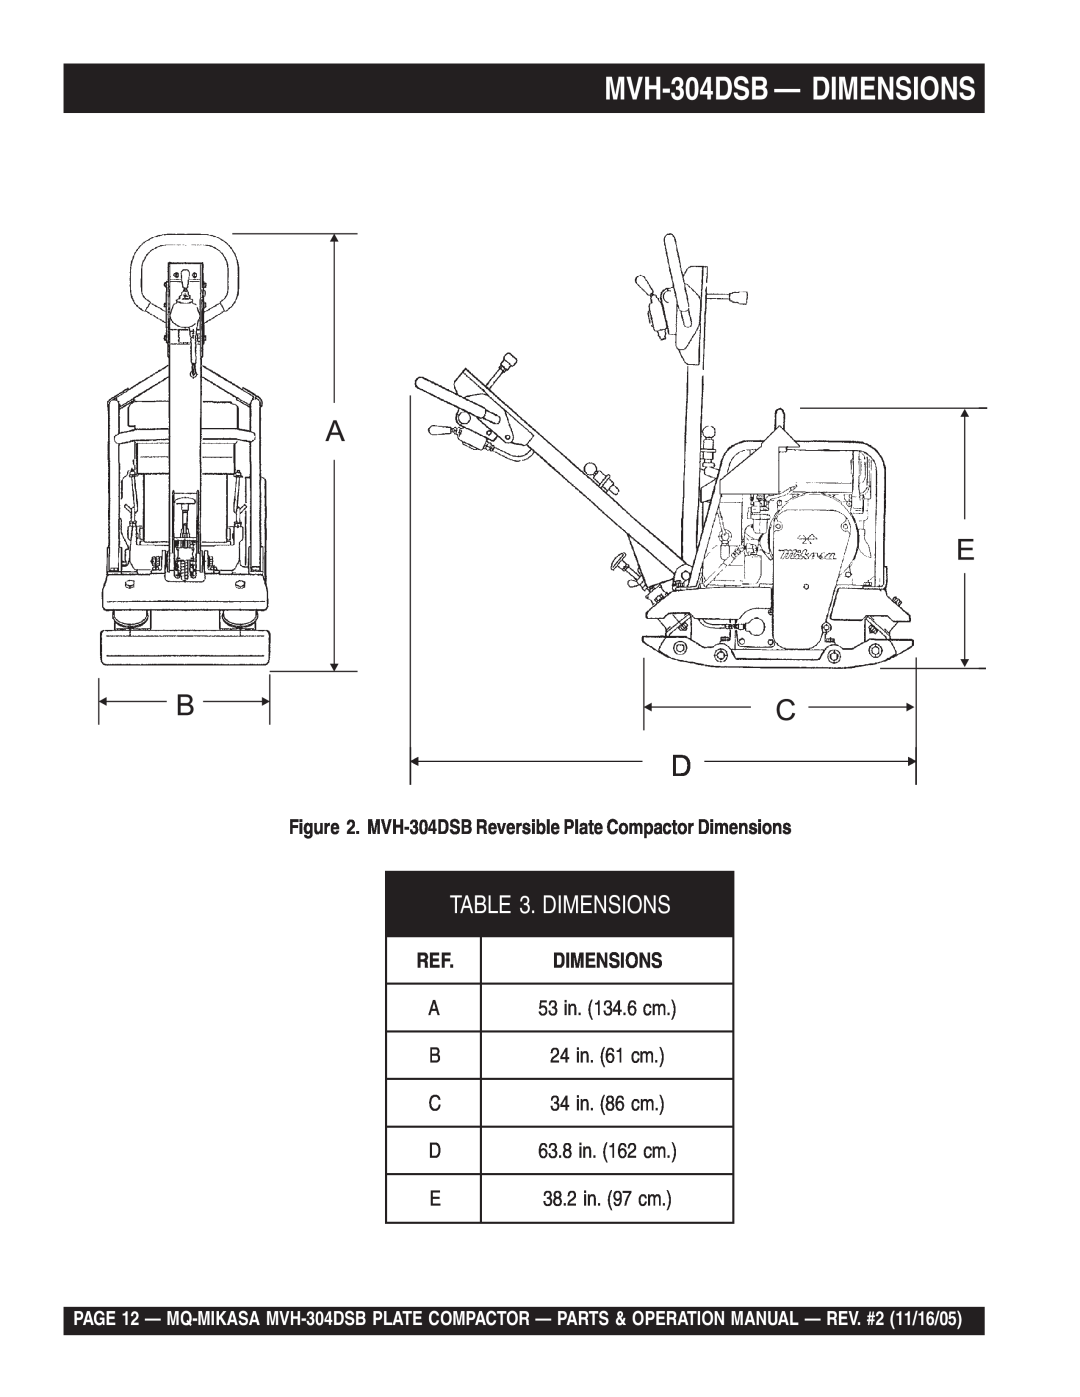 Multiquip operation manual MVH-304DSB - DIMENSIONS, MVH-304DSB Reversible Plate Compactor Dimensions 